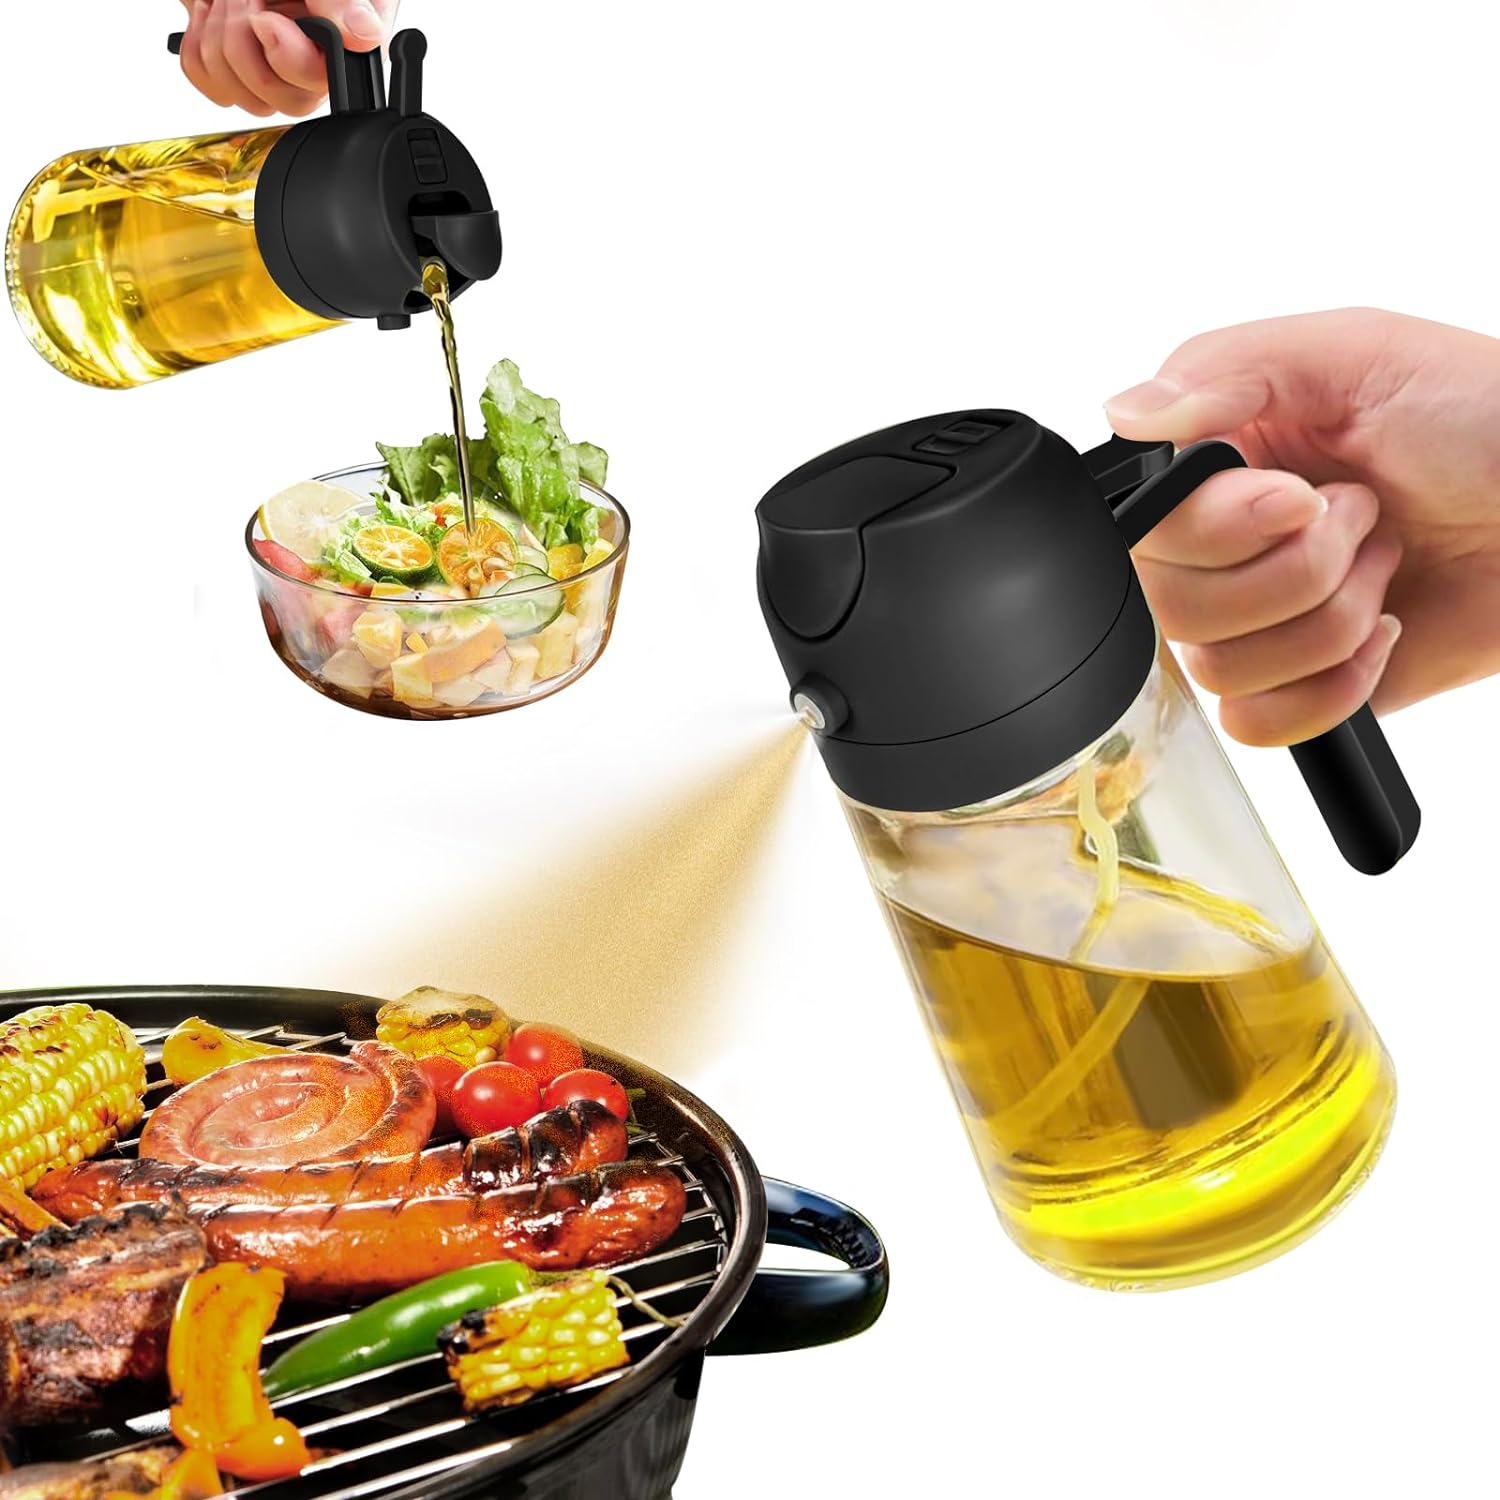 Olive Oil Dispenser, 2 in 1 Oil Sprayer for Cooking, 17oz/500ml Glass Oil Spray Bottle with Pourer, Food-grade Oil Dispenser and Oil Sprayer for Kitchen, Salad, Frying, BBQ (Black)